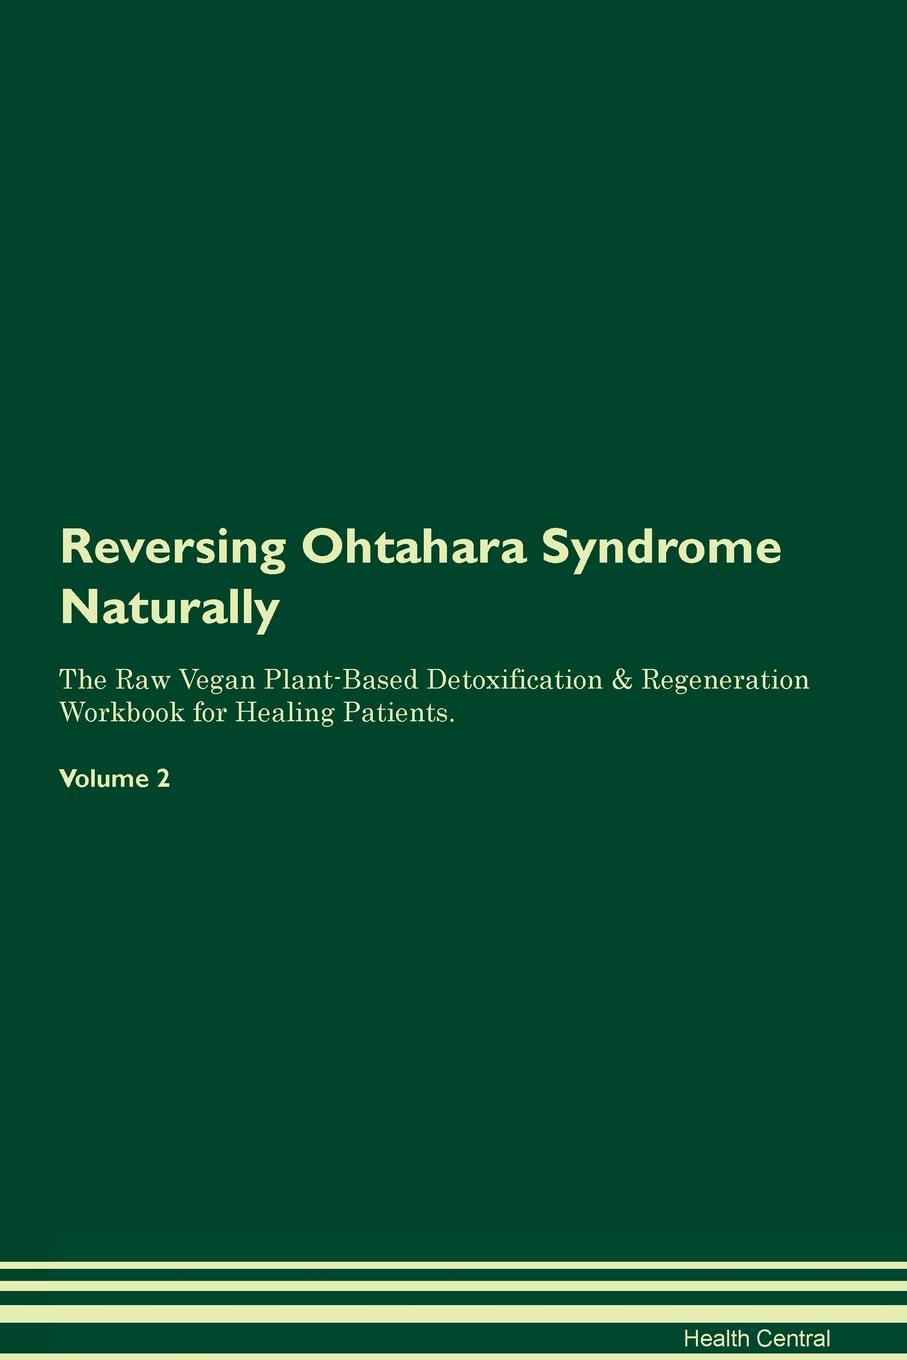 Reversing Ohtahara Syndrome Naturally The Raw Vegan Plant-Based Detoxification & Regeneration Workbook for Healing Patients. Volume 2